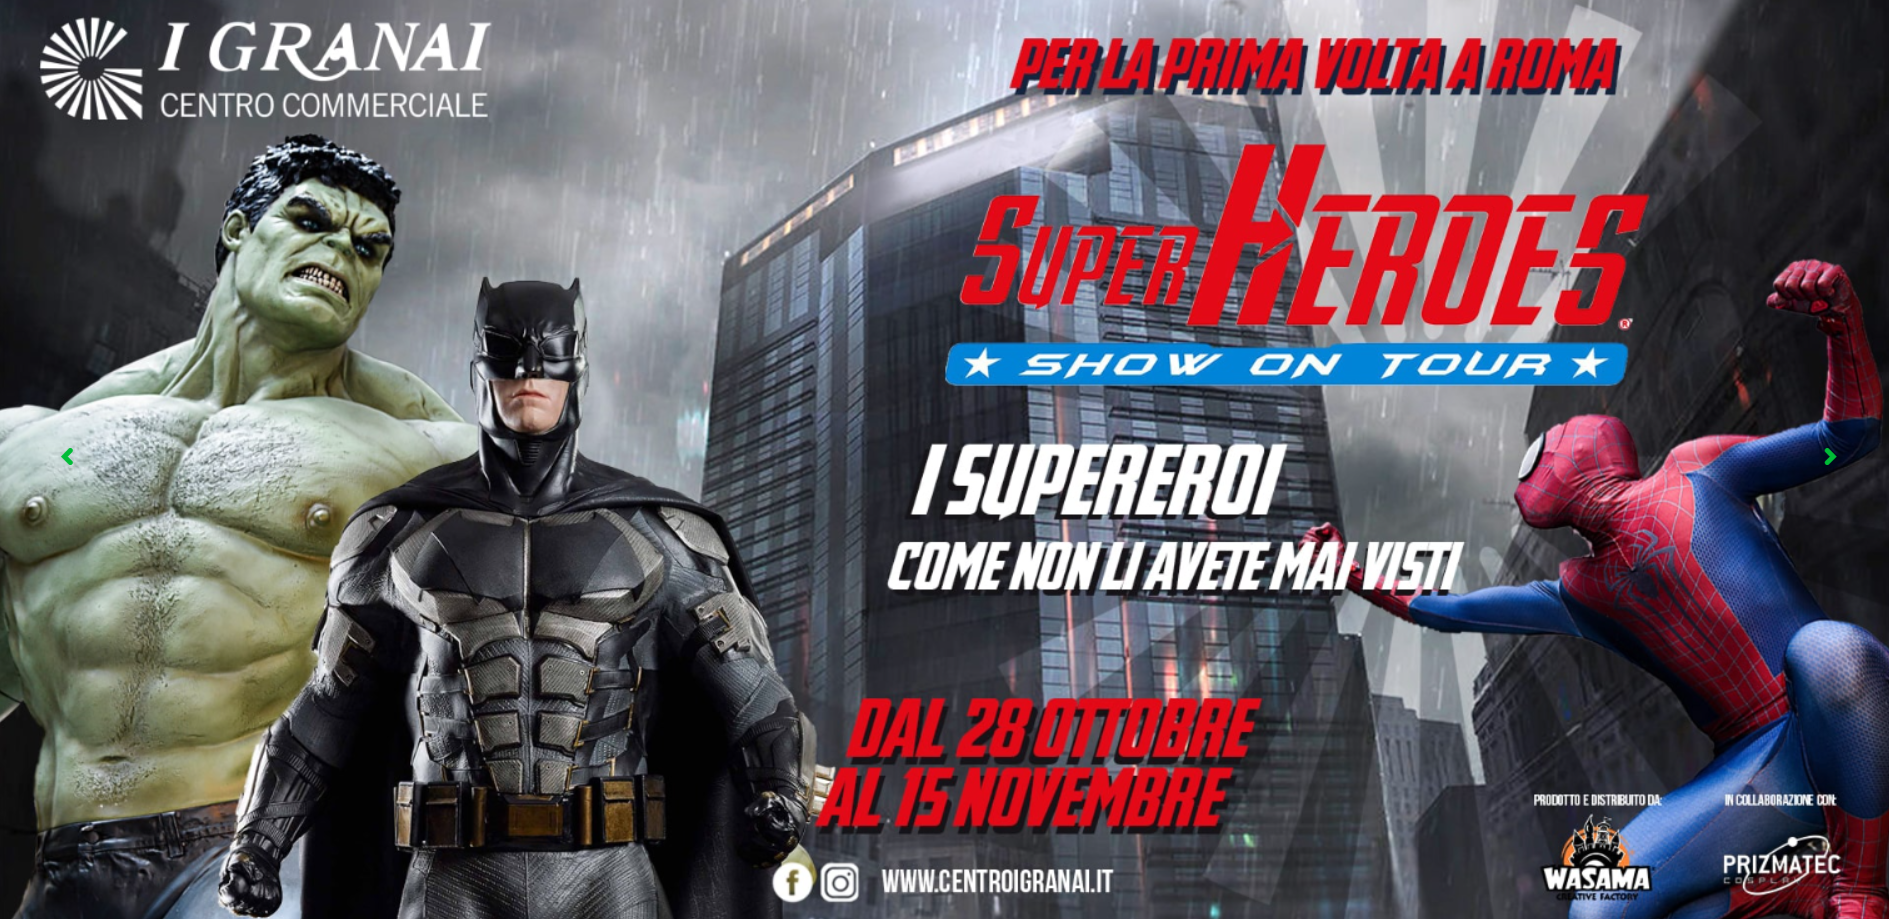 Super Heroes Show on Tour @ I Granai Roma